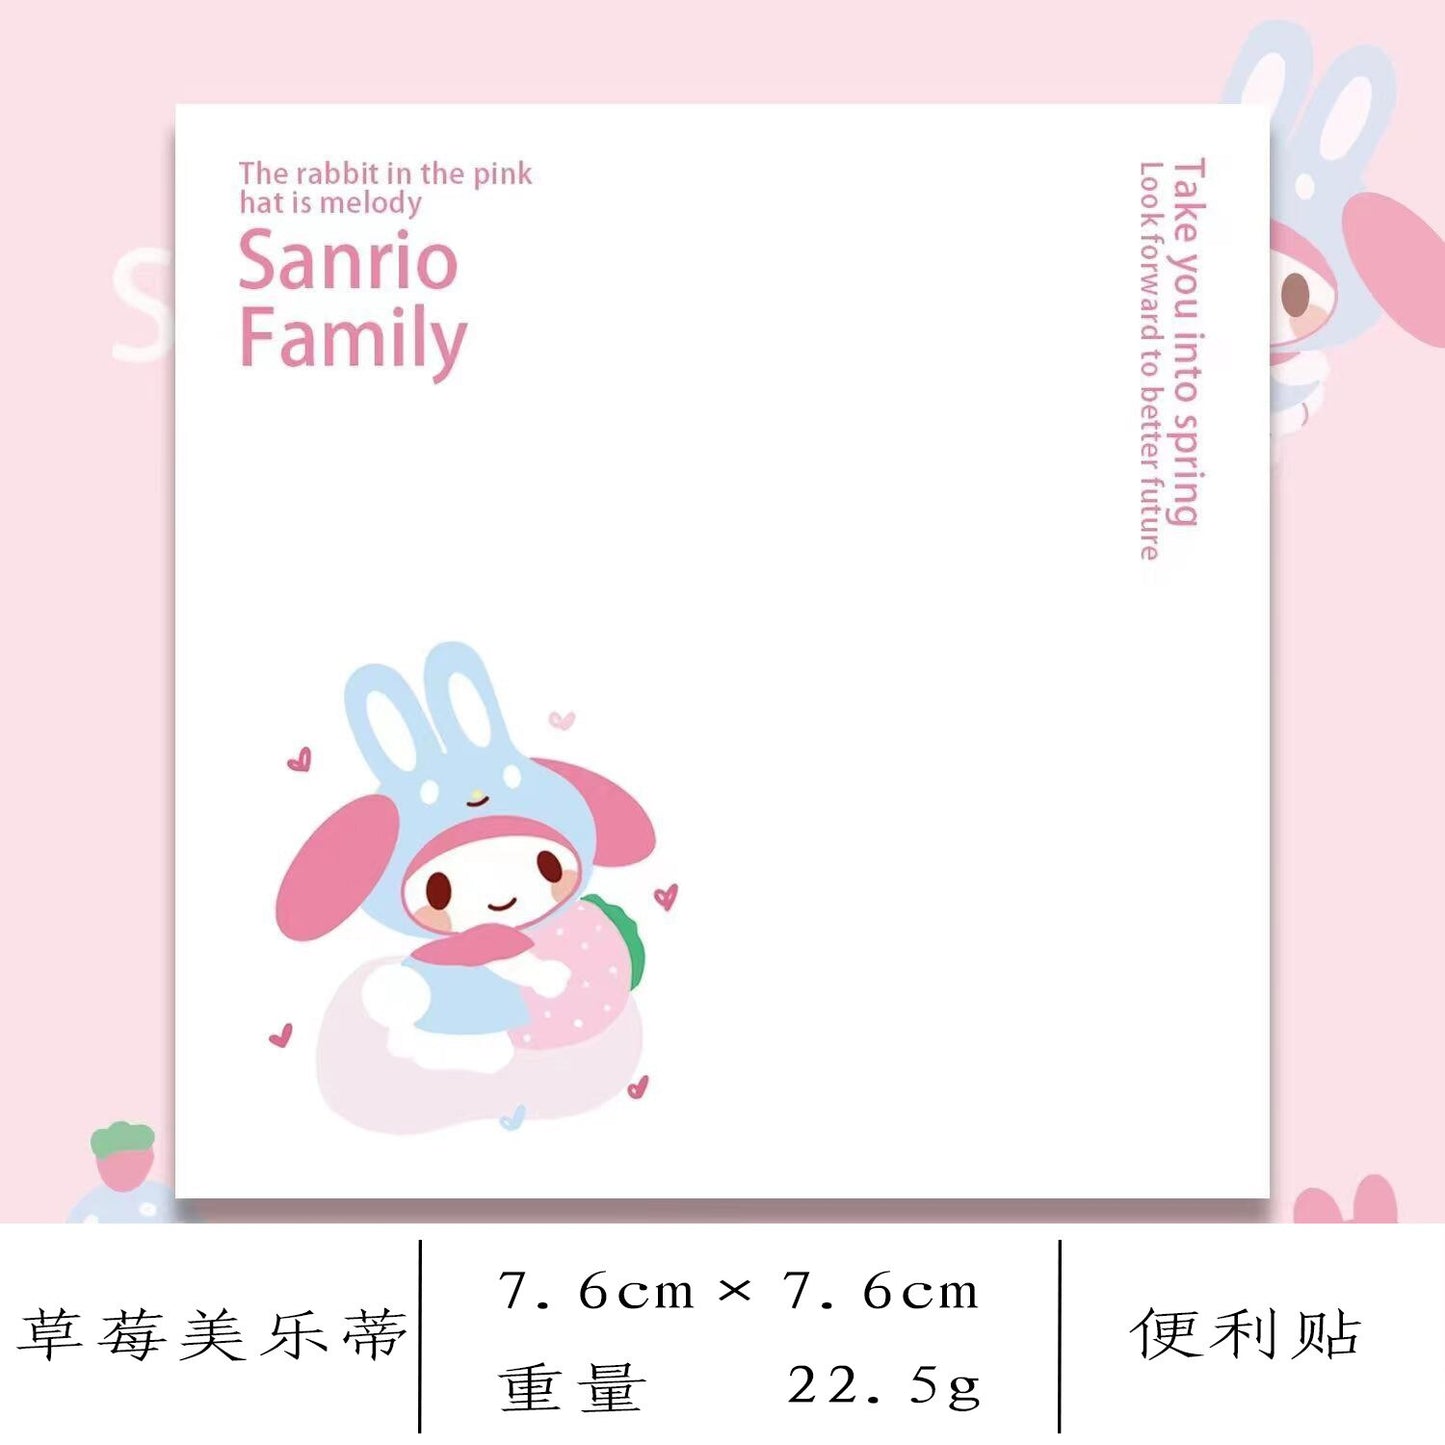 Sanrio Stationary Sets